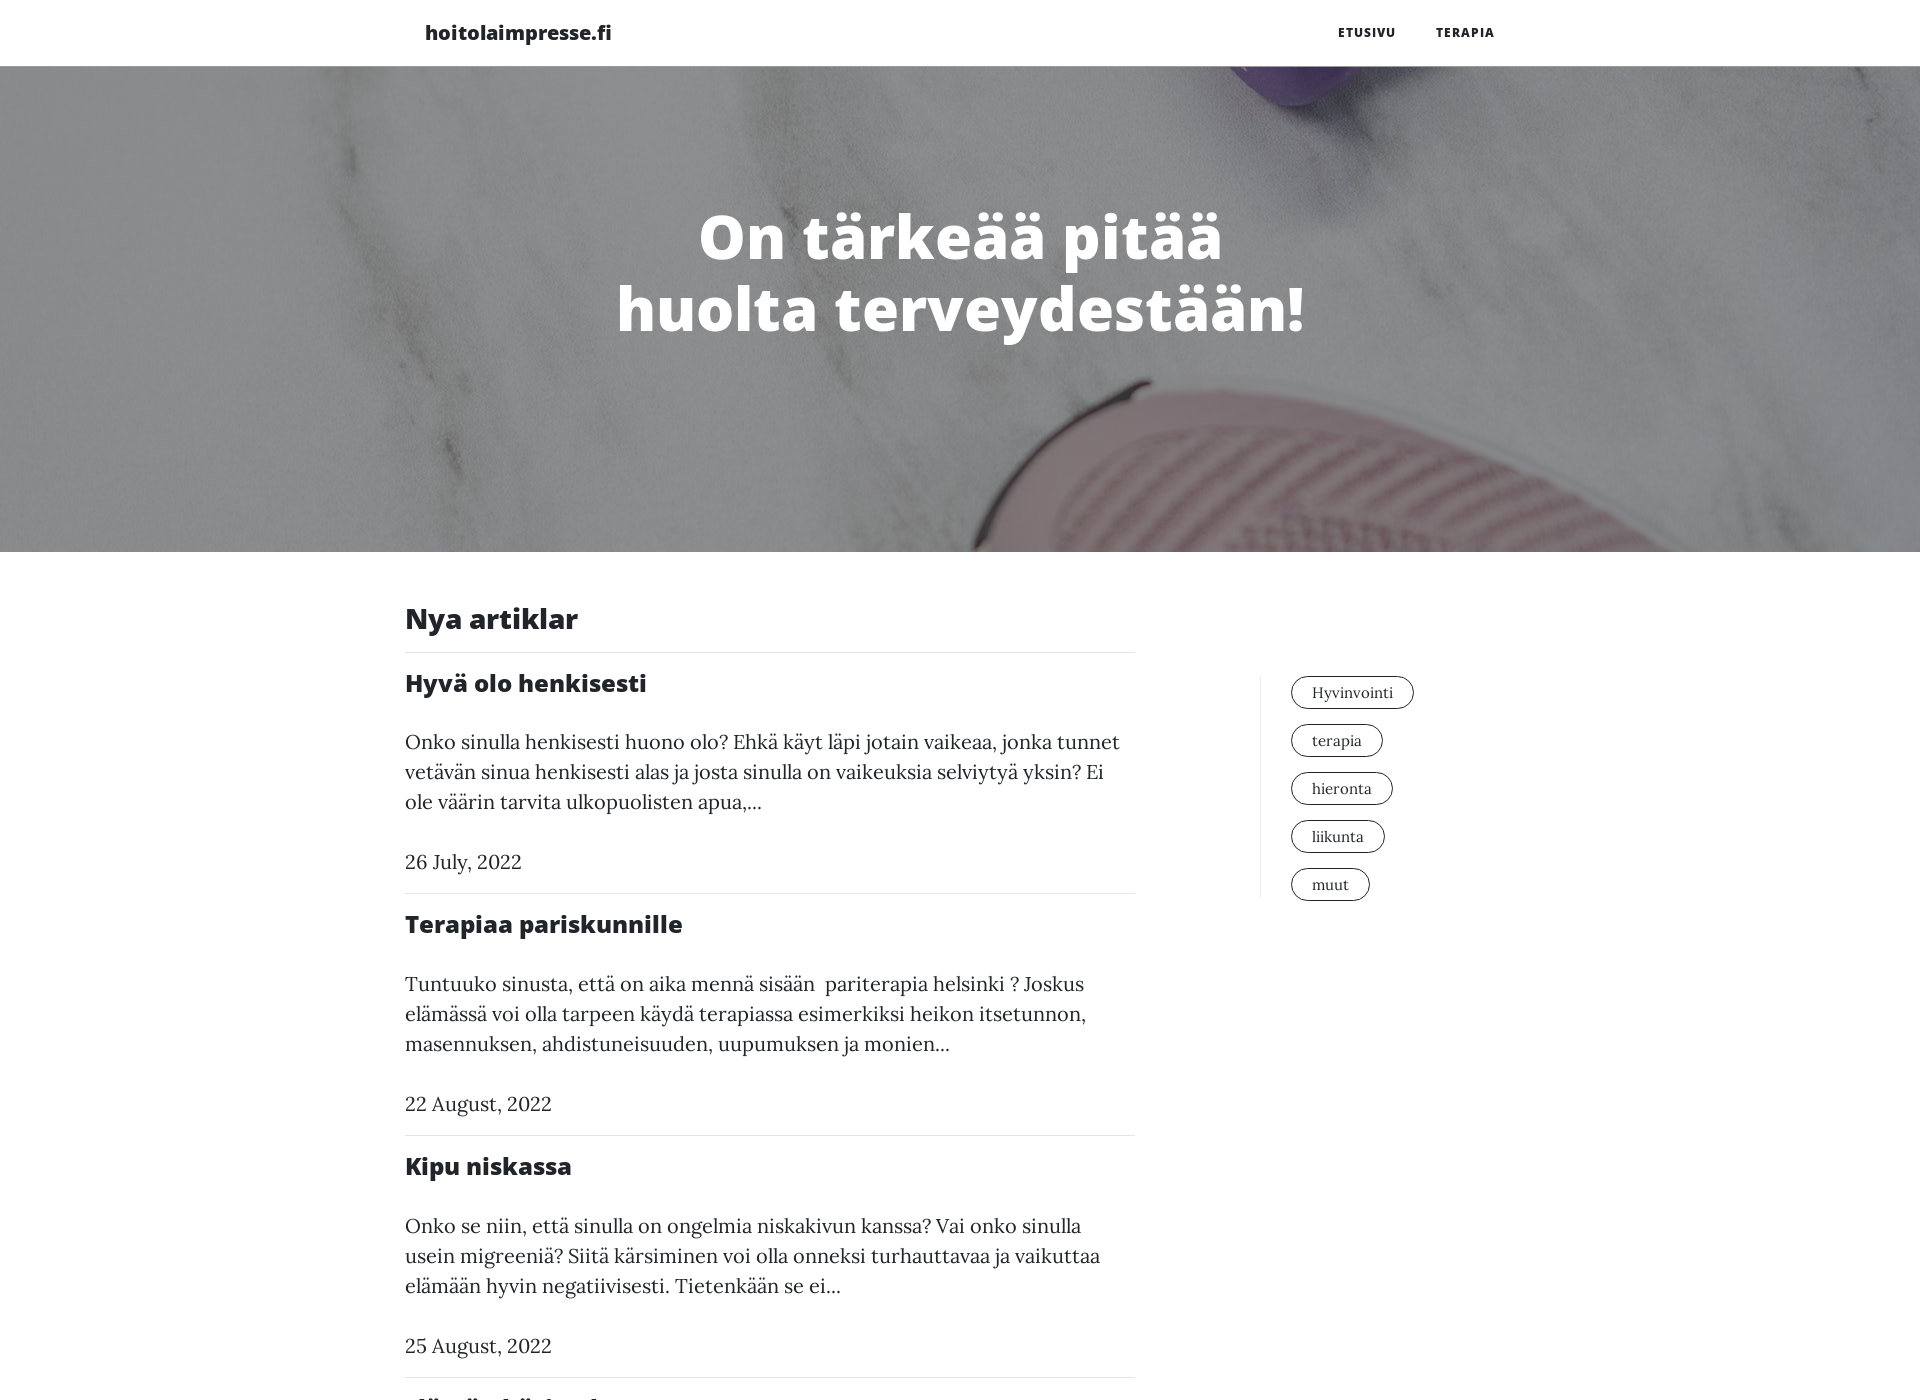 Skärmdump för hoitolaimpresse.fi